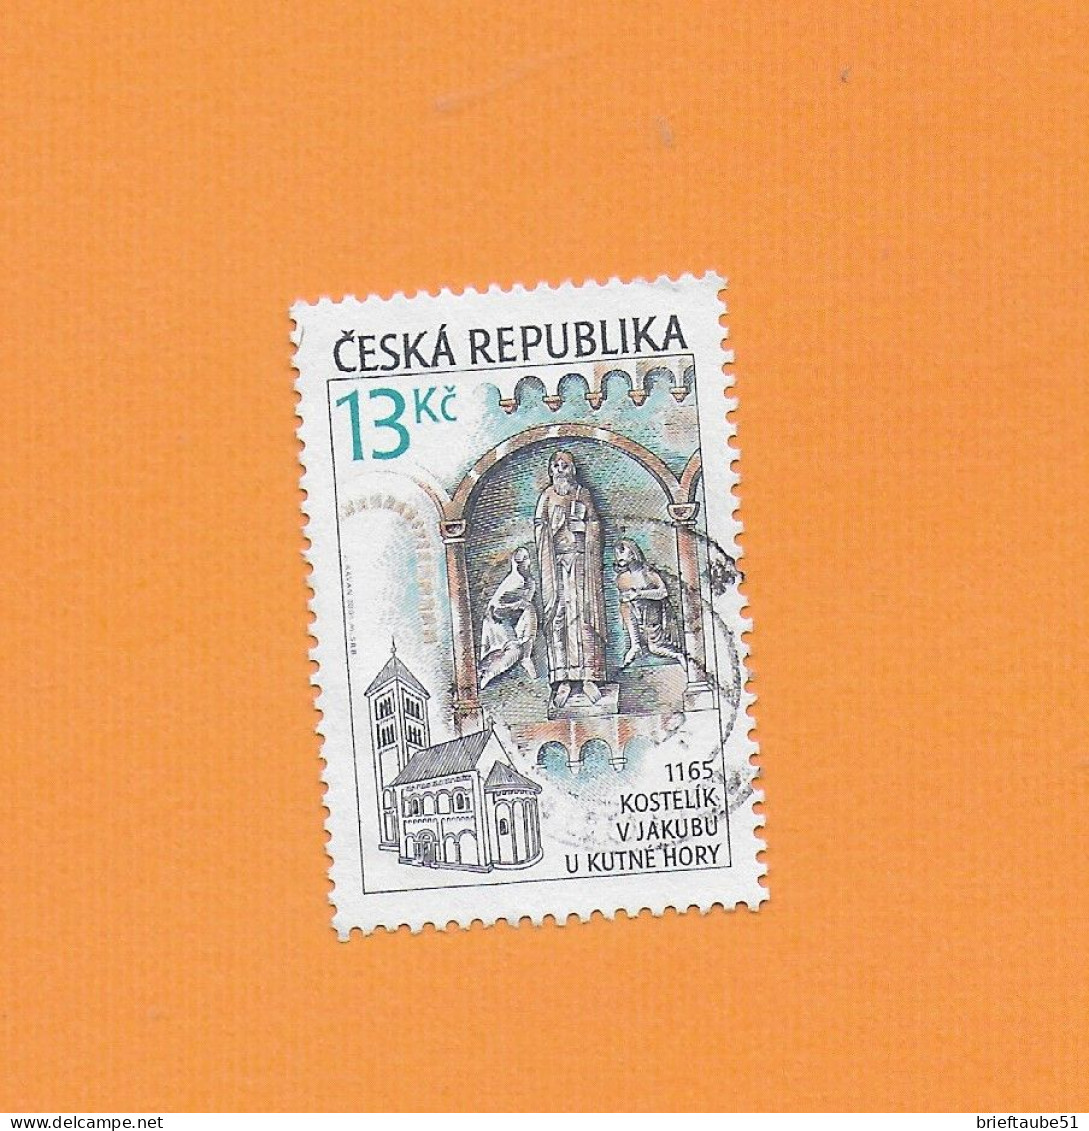 CZECH REPUBLIC 2000 Gestempelt°Used/Bedarf   MiNr. 284  "Theologe Jan Amos Komensky" - Used Stamps